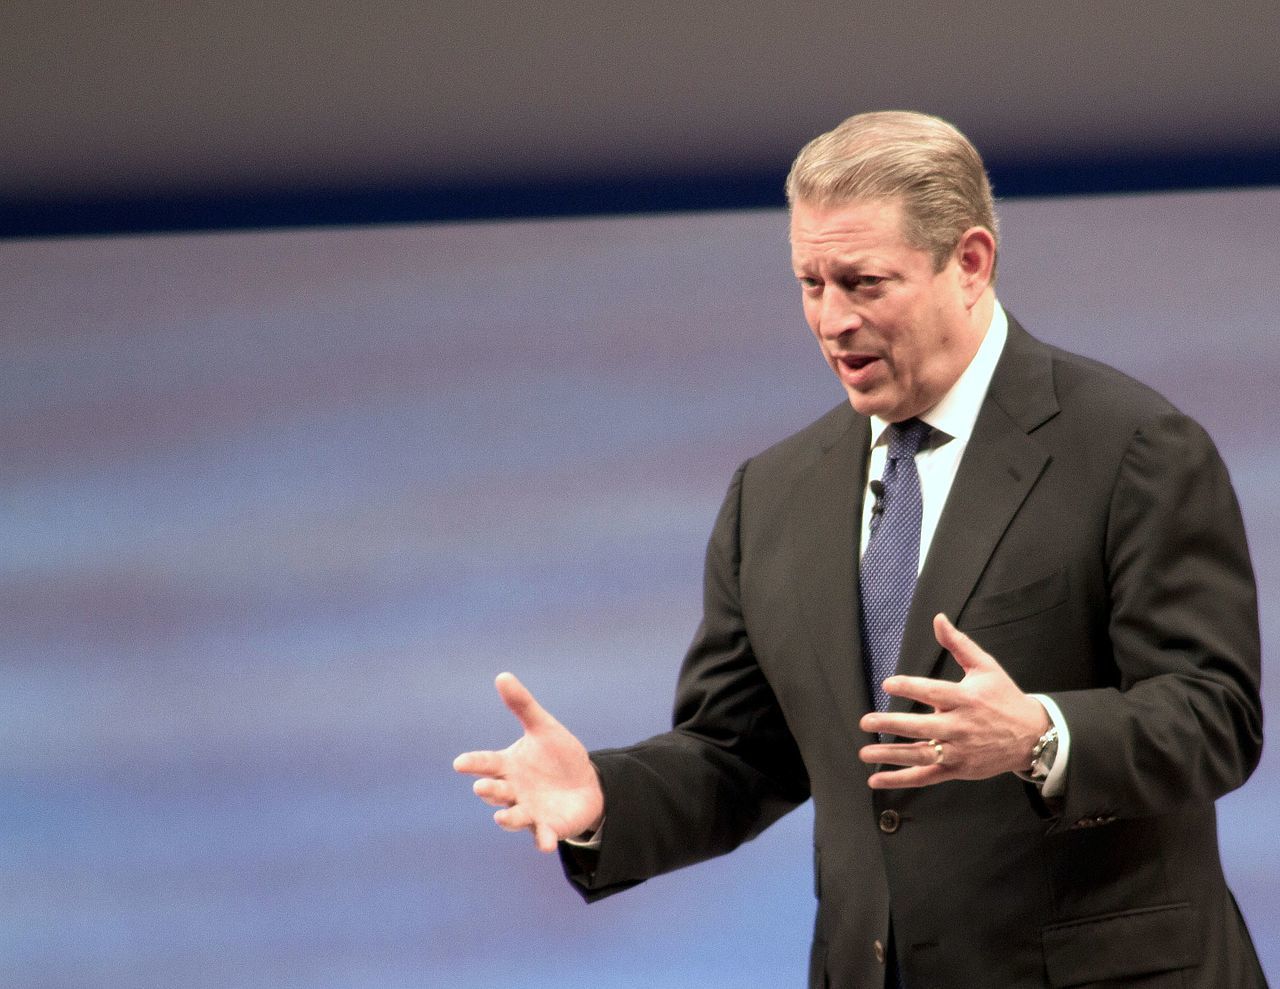 former Vice President Al Gore